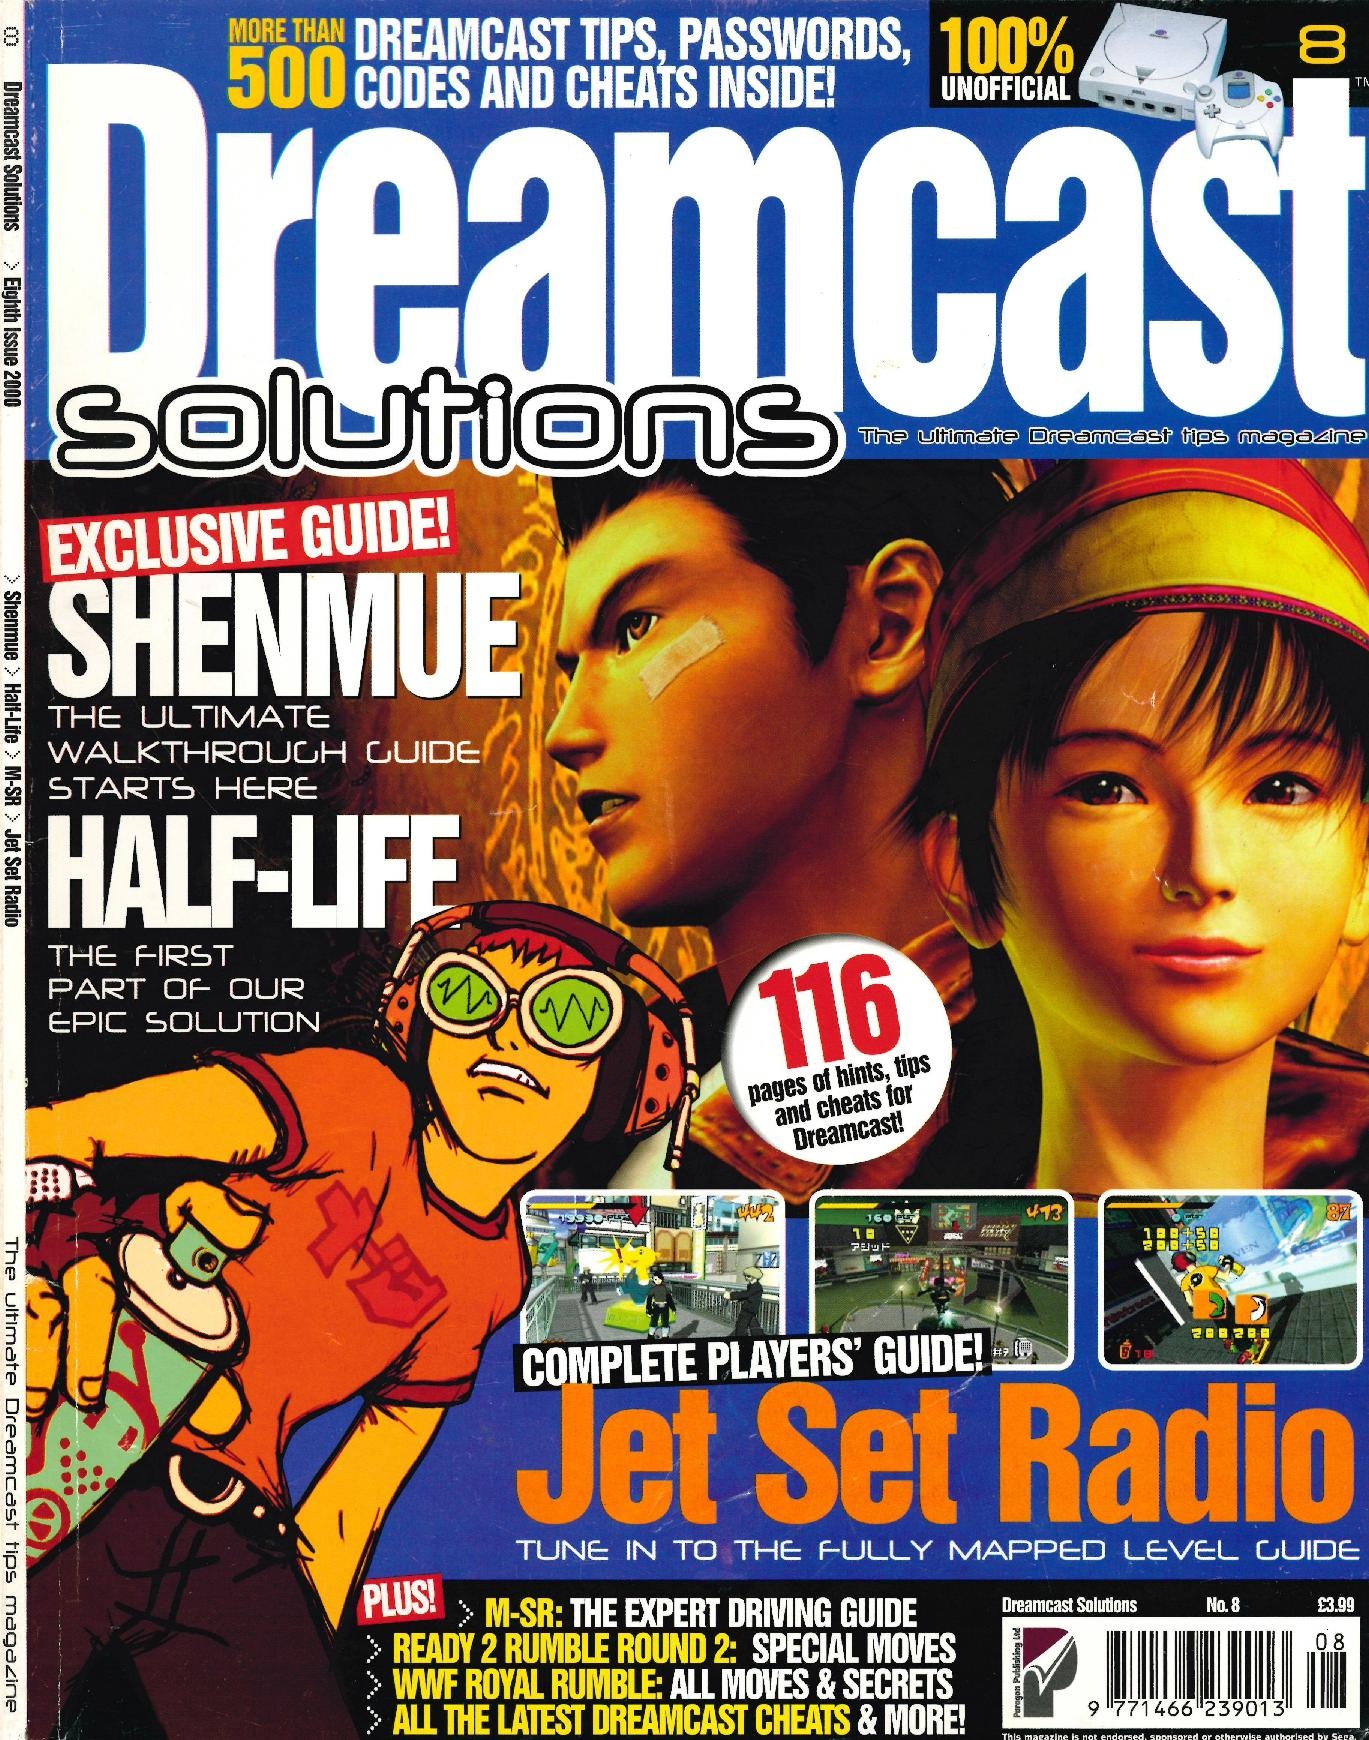 DreamcastSolutions UK 08.pdf